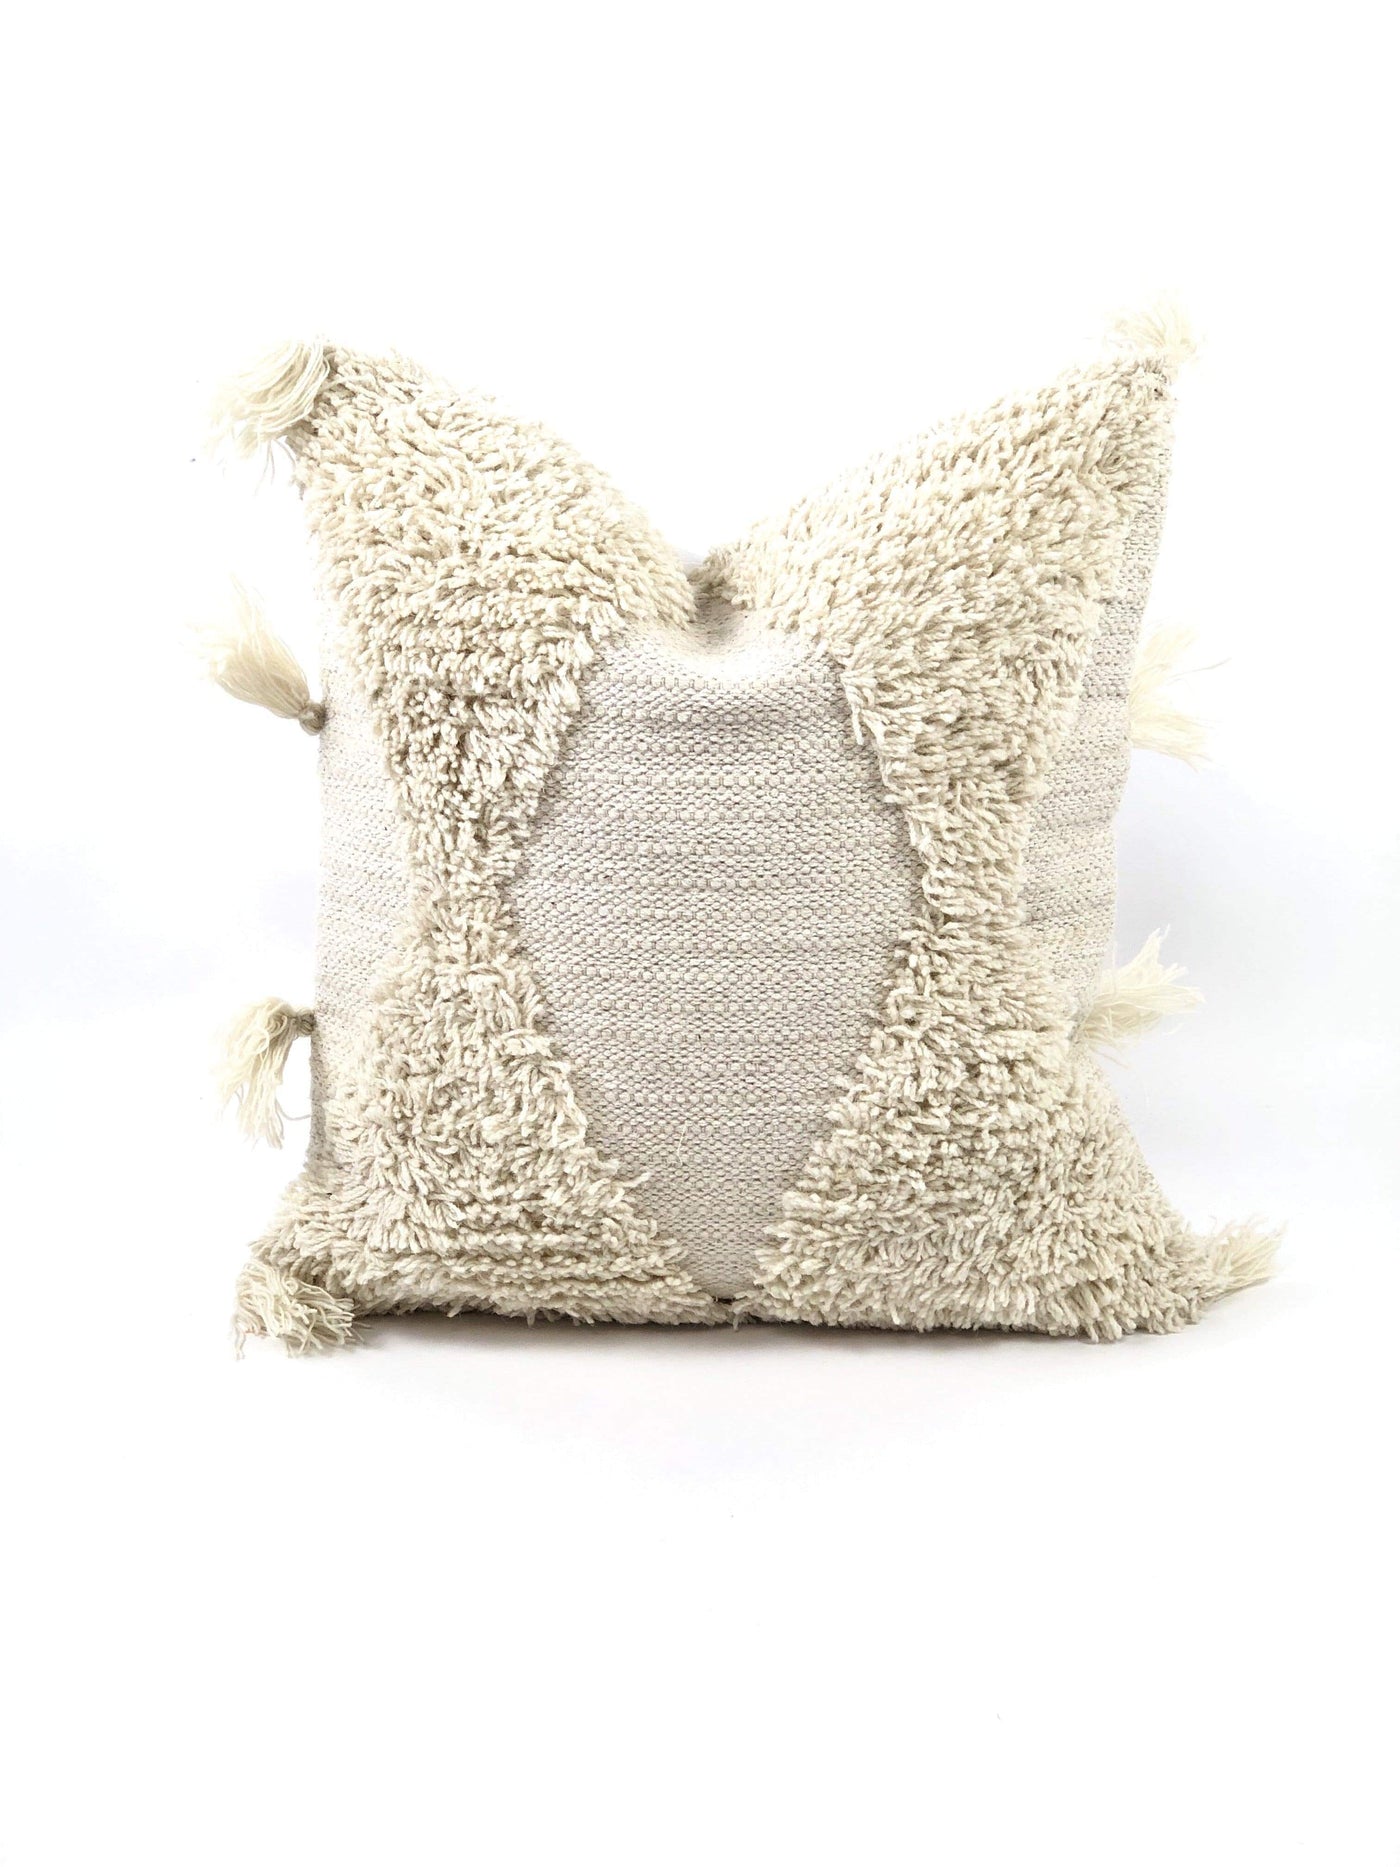 Bryar Wolf Handmade Decorative Throw Pillows With Insert / 20" x 20" LALI